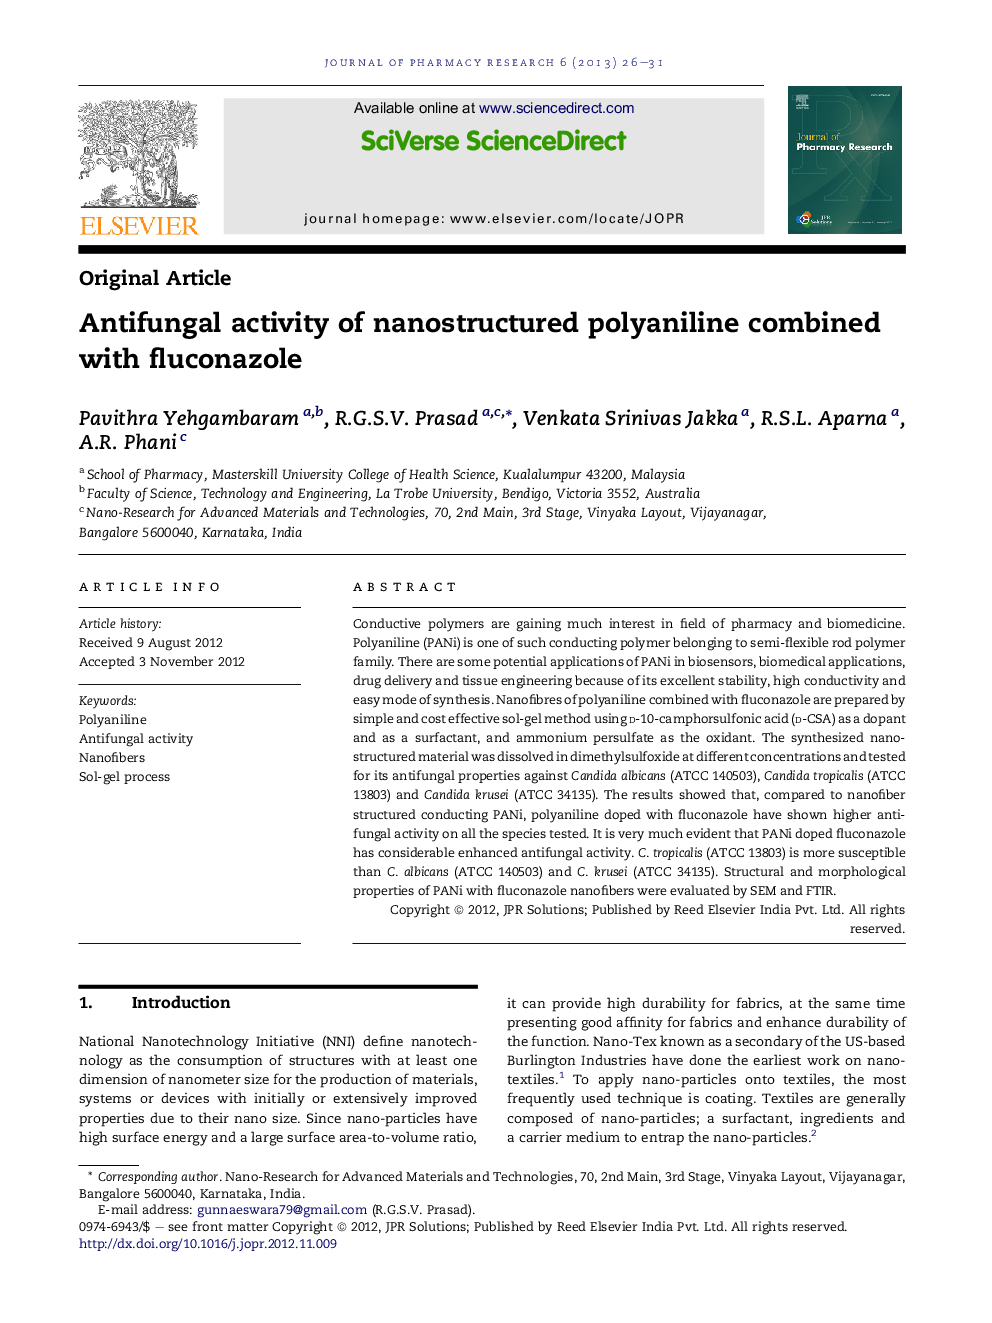 Antifungal activity of nanostructured polyaniline combined with fluconazole